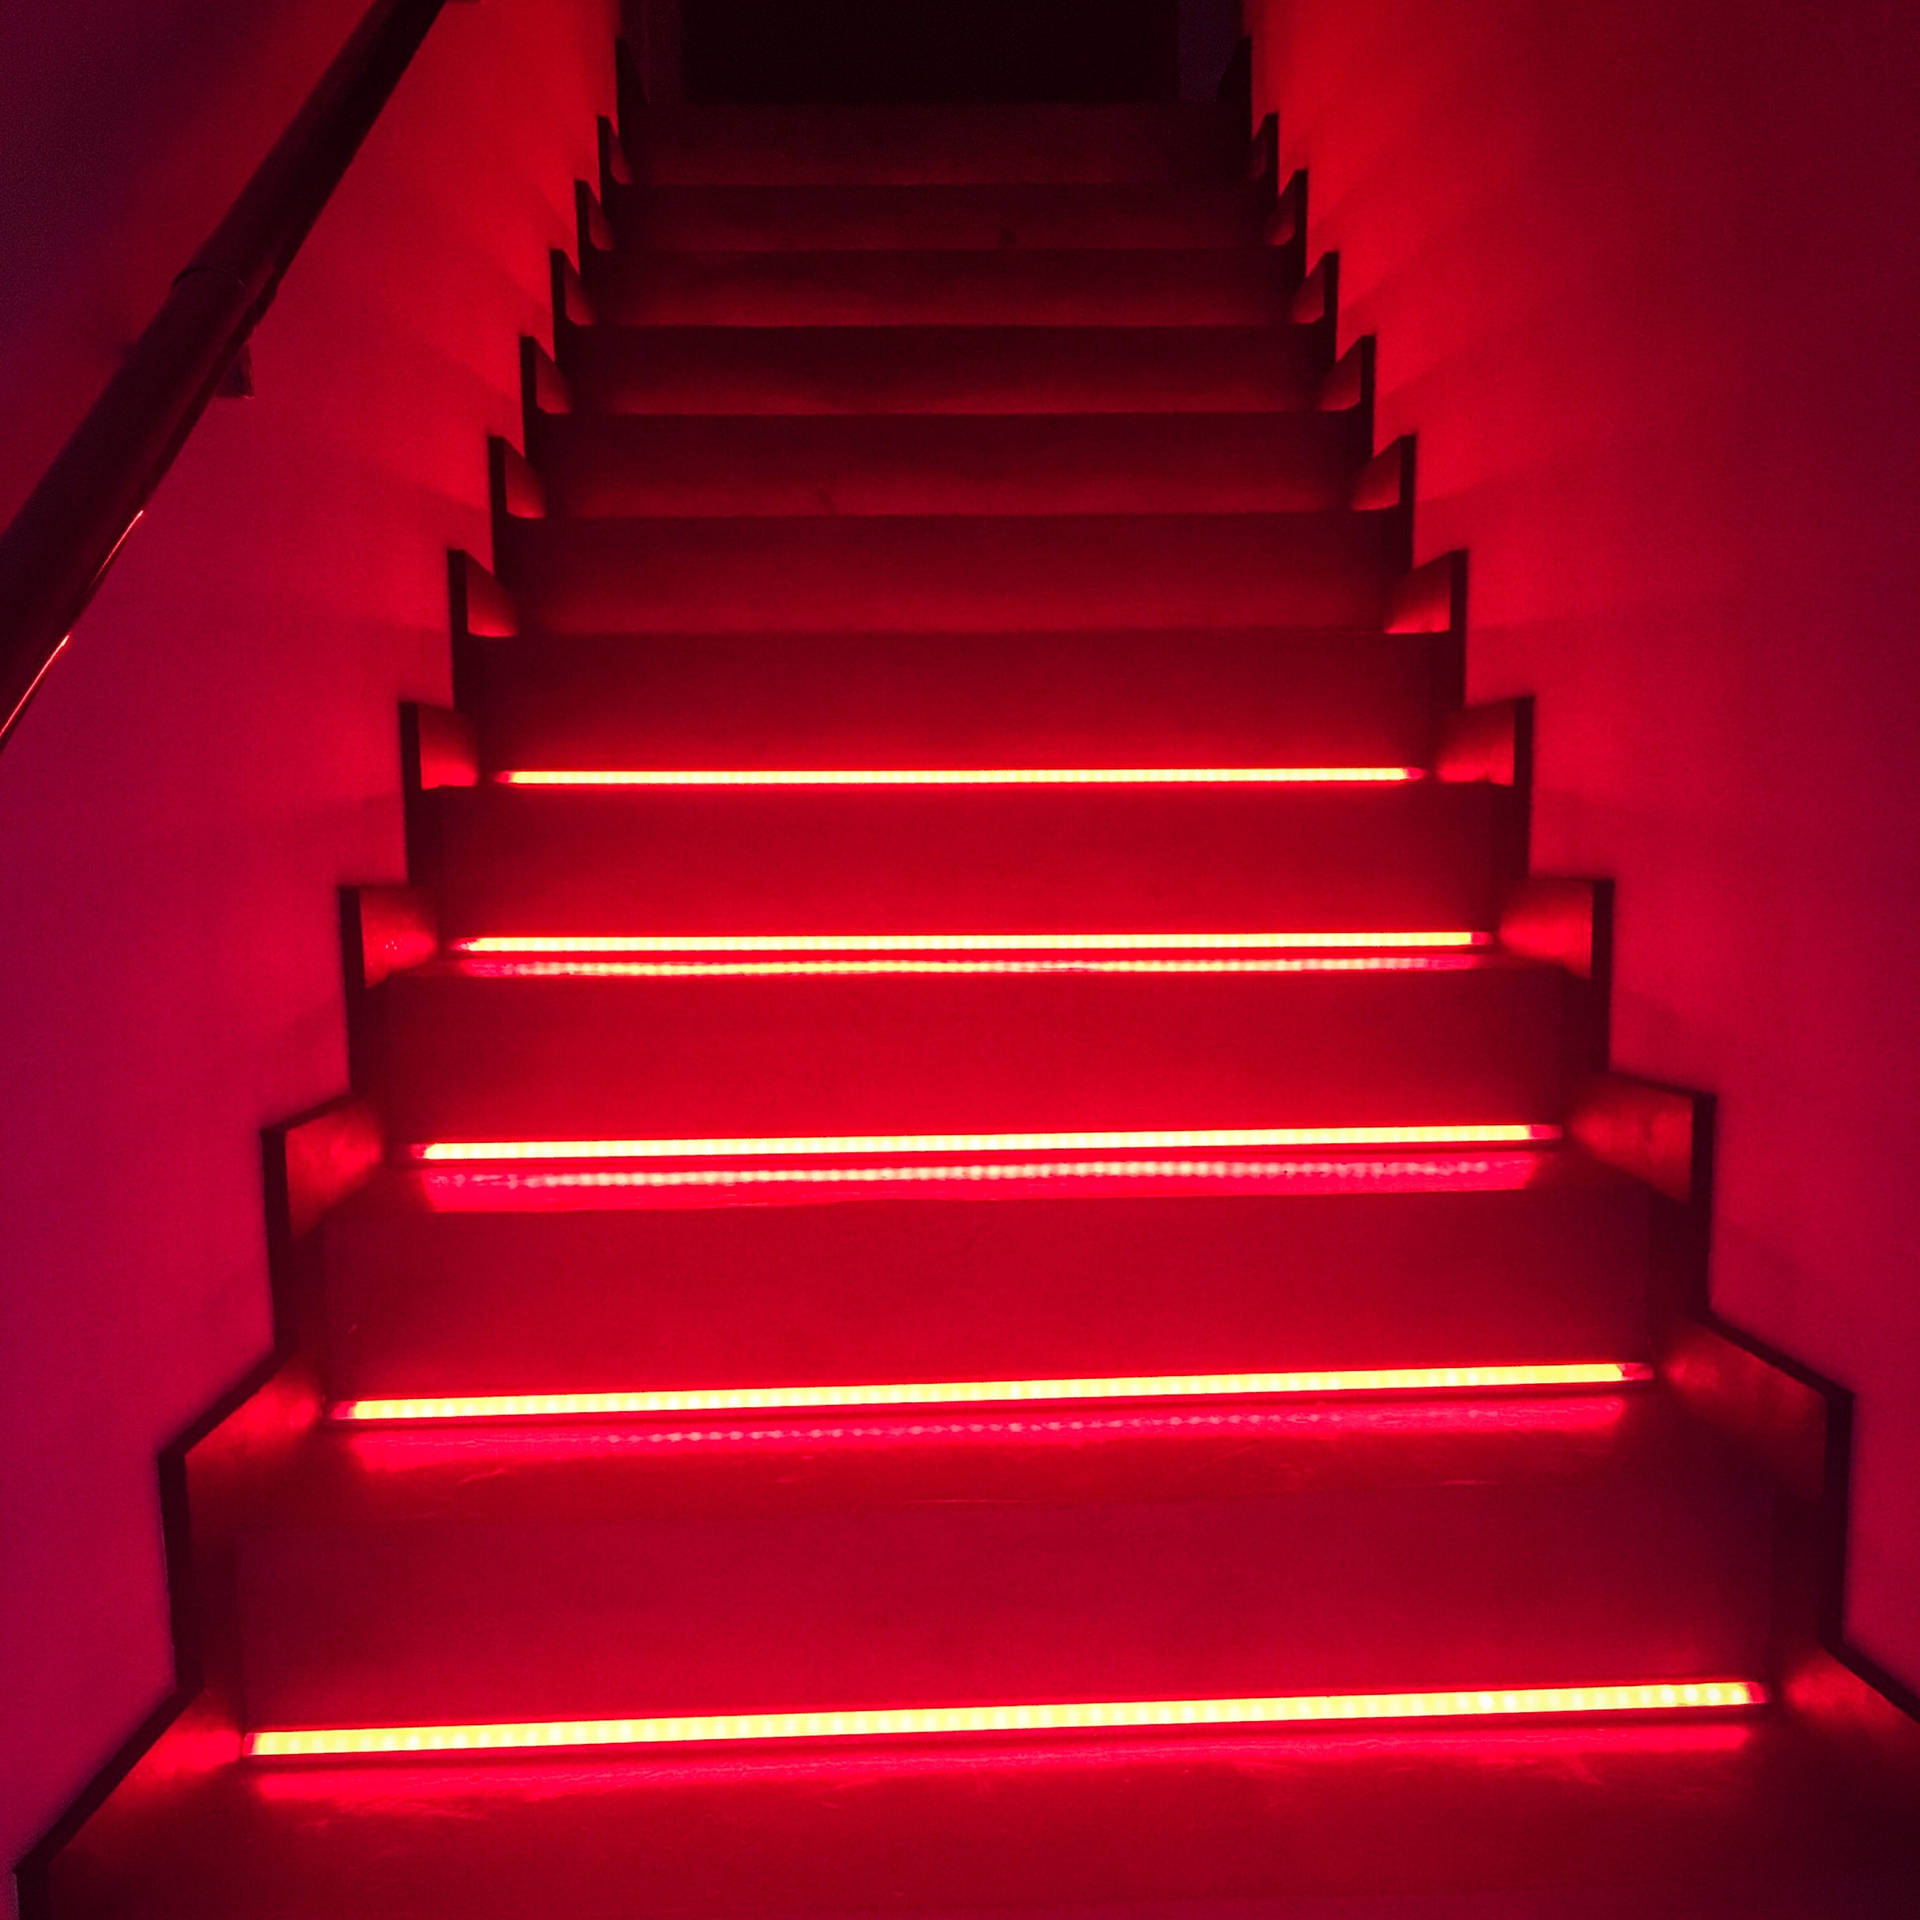 Red Aesthetic Neon Stair Lights Wallpaper